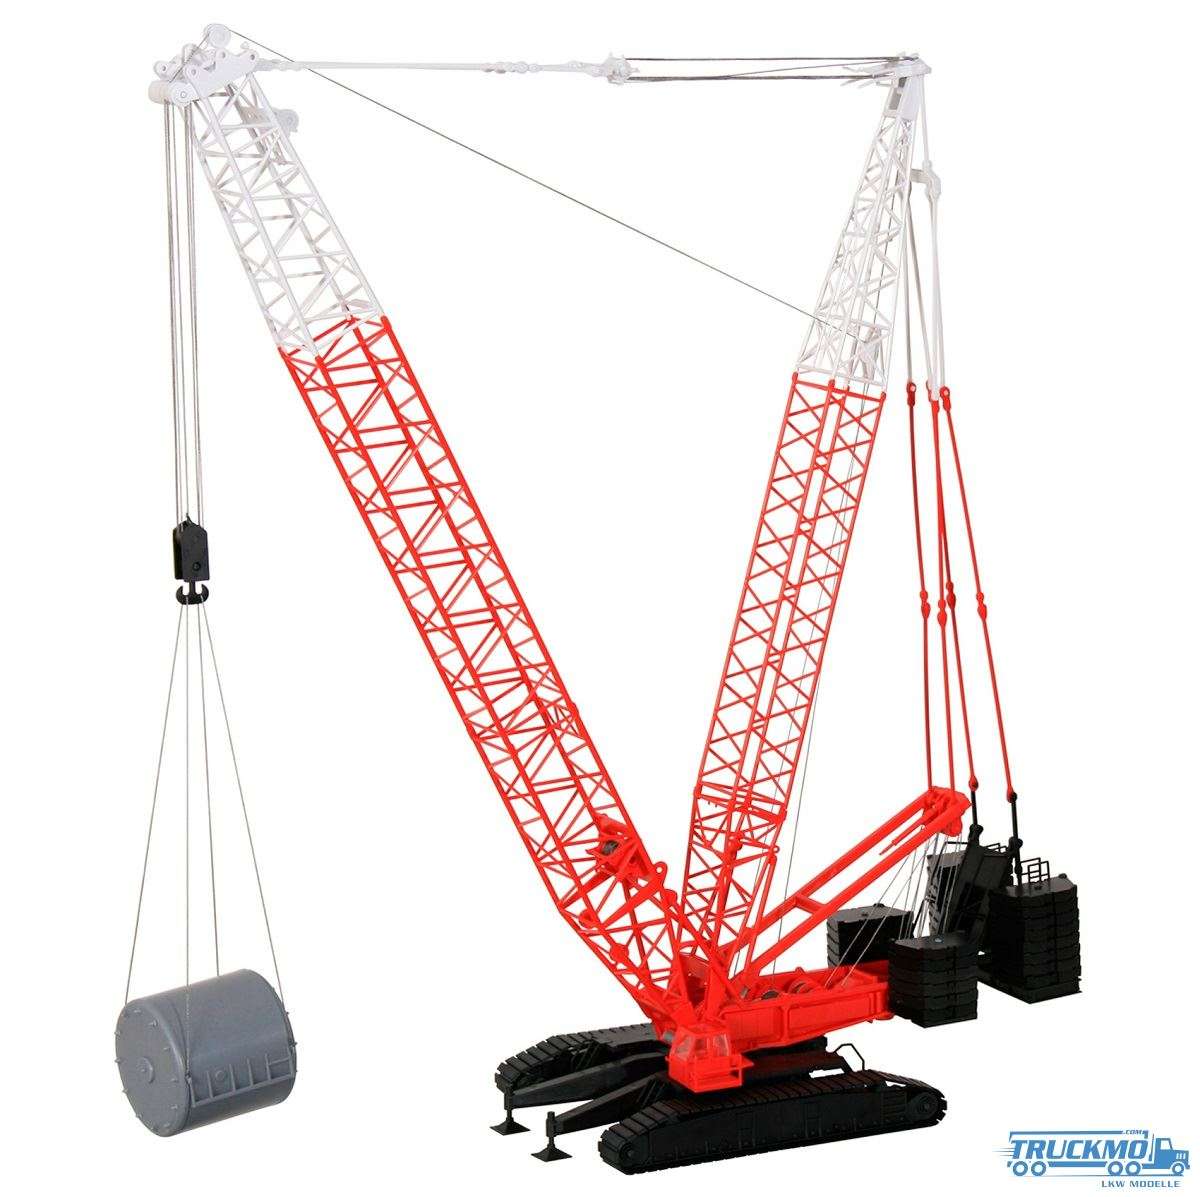 Kibri Liebherr crawler crane with lattice mast 13013